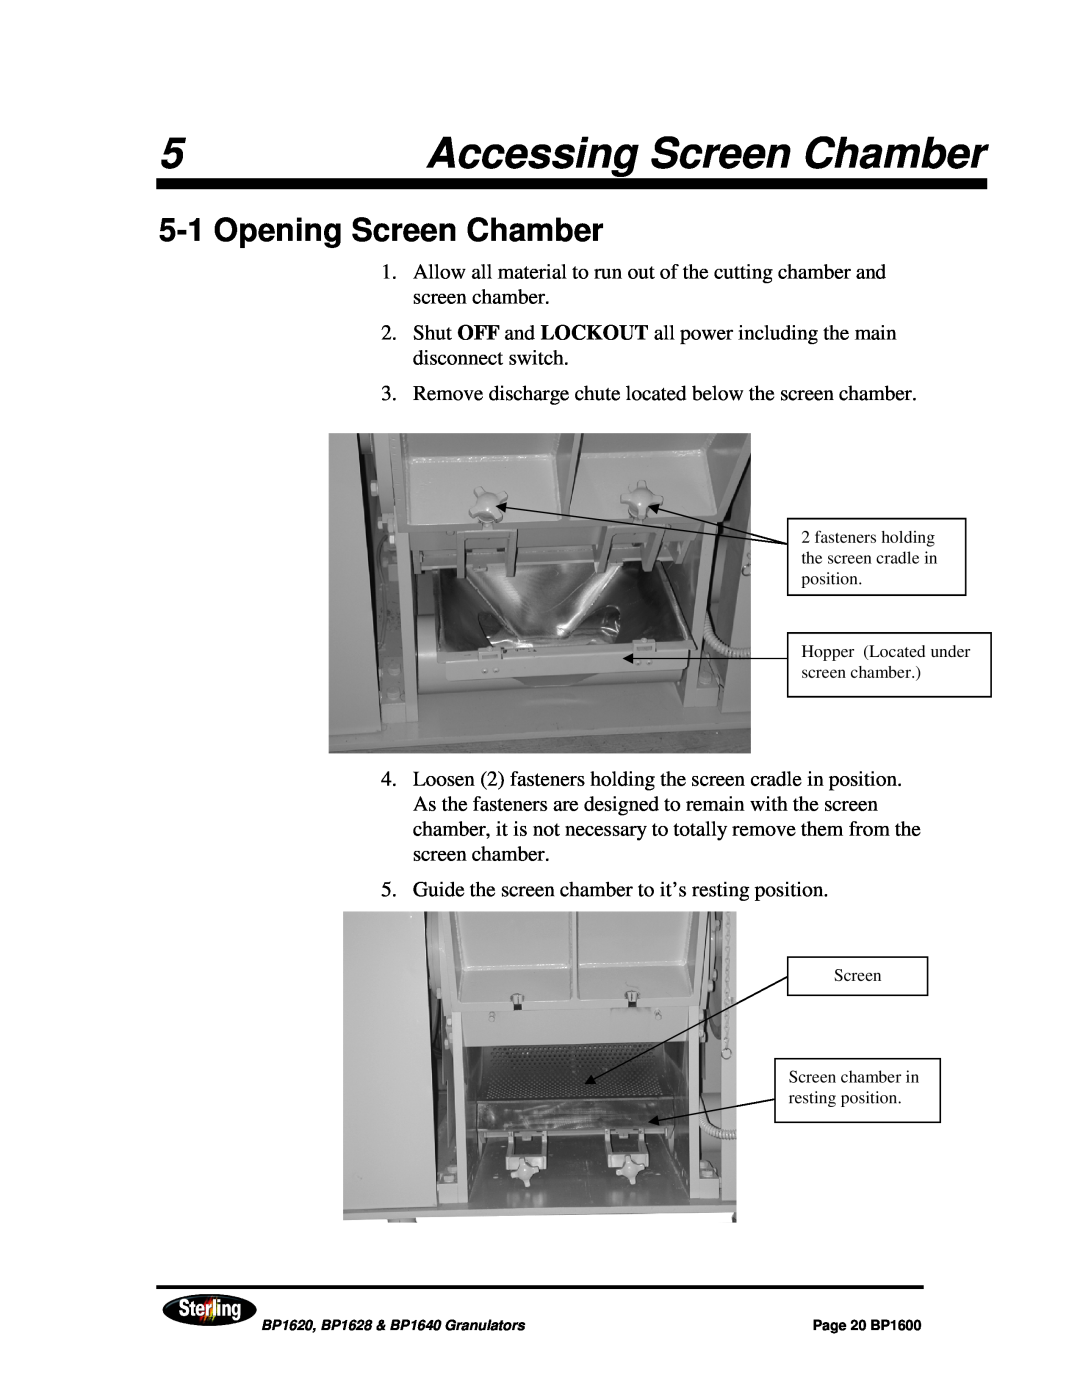 Sterling BP1620, BP1628, BP1640 installation manual Accessing Screen Chamber, 5-1Opening Screen Chamber 